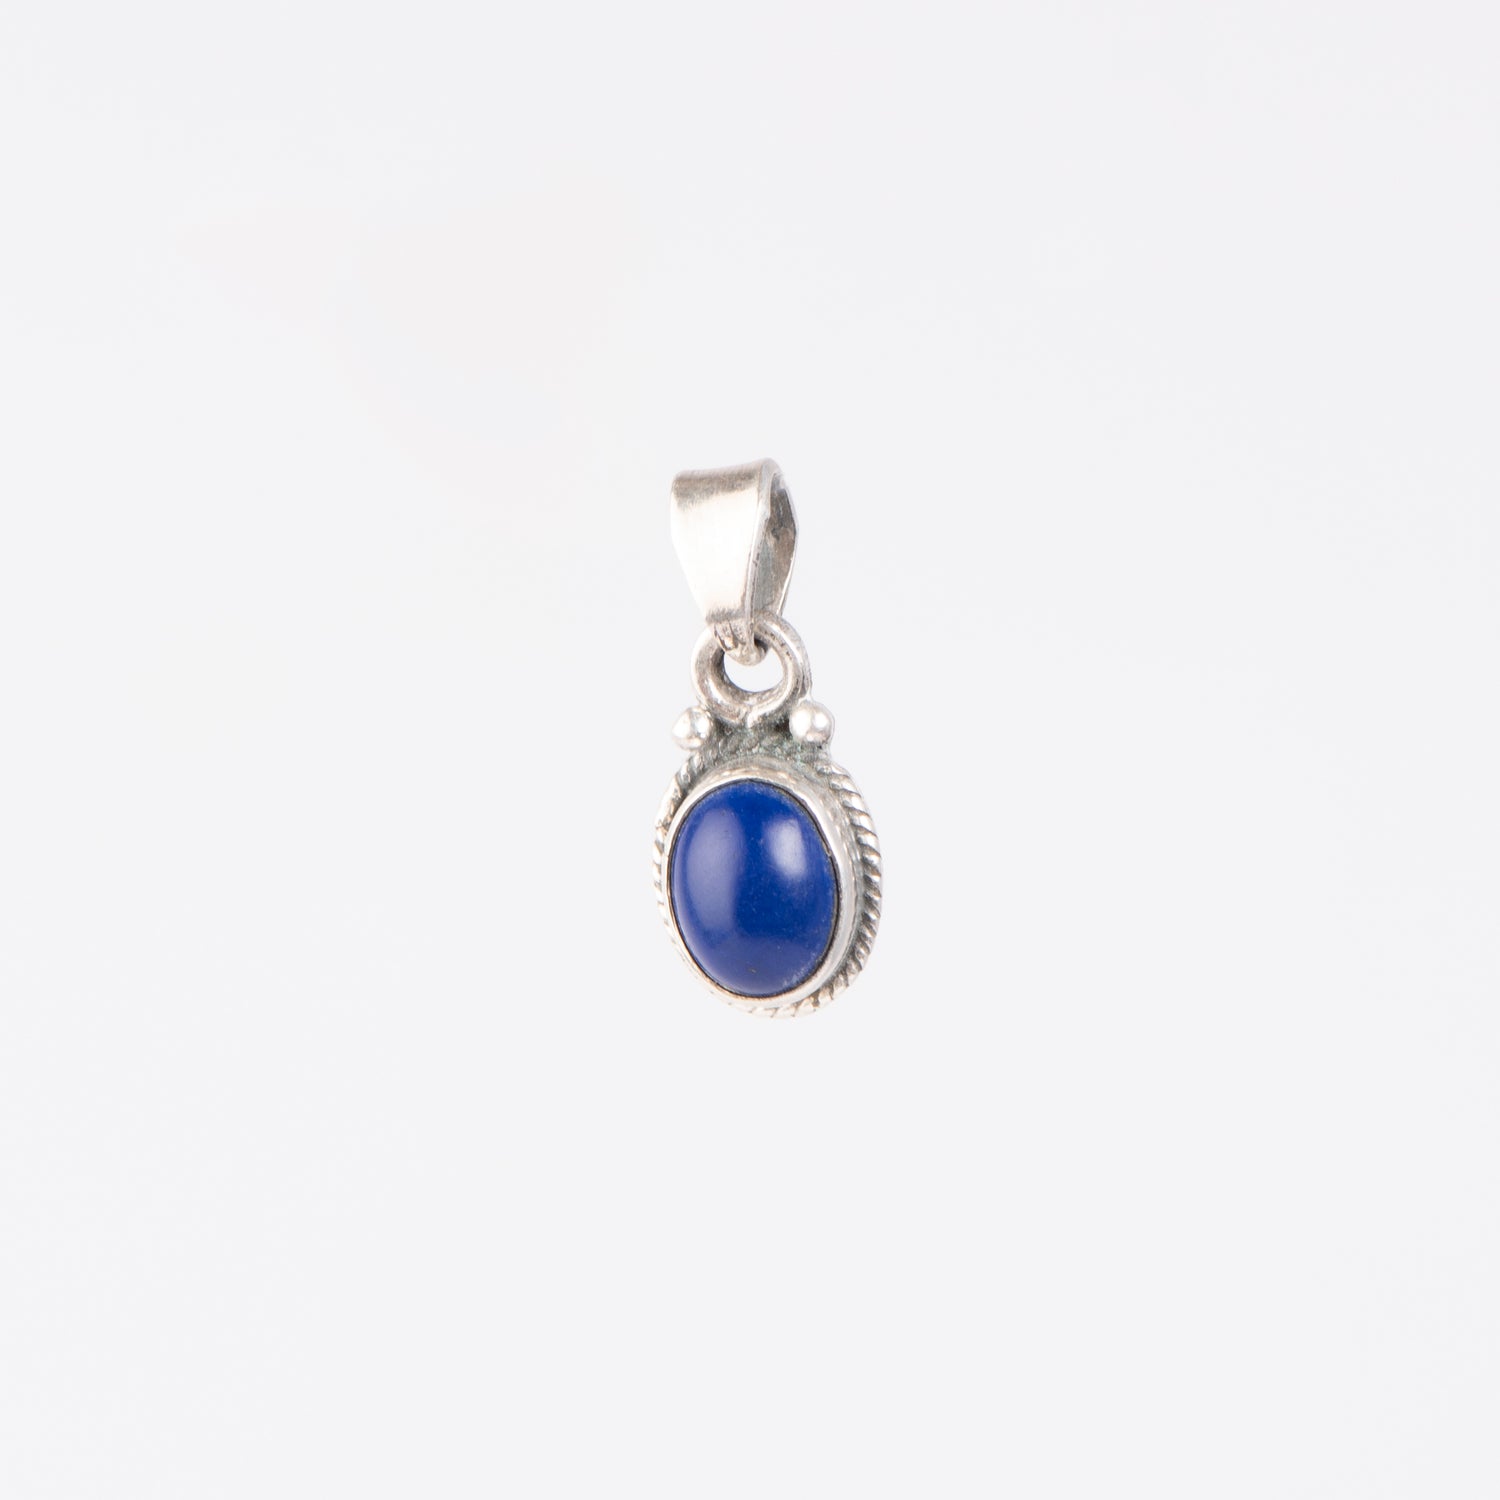 Lapis Lazuli Small Oval Shaped Silver Pendant